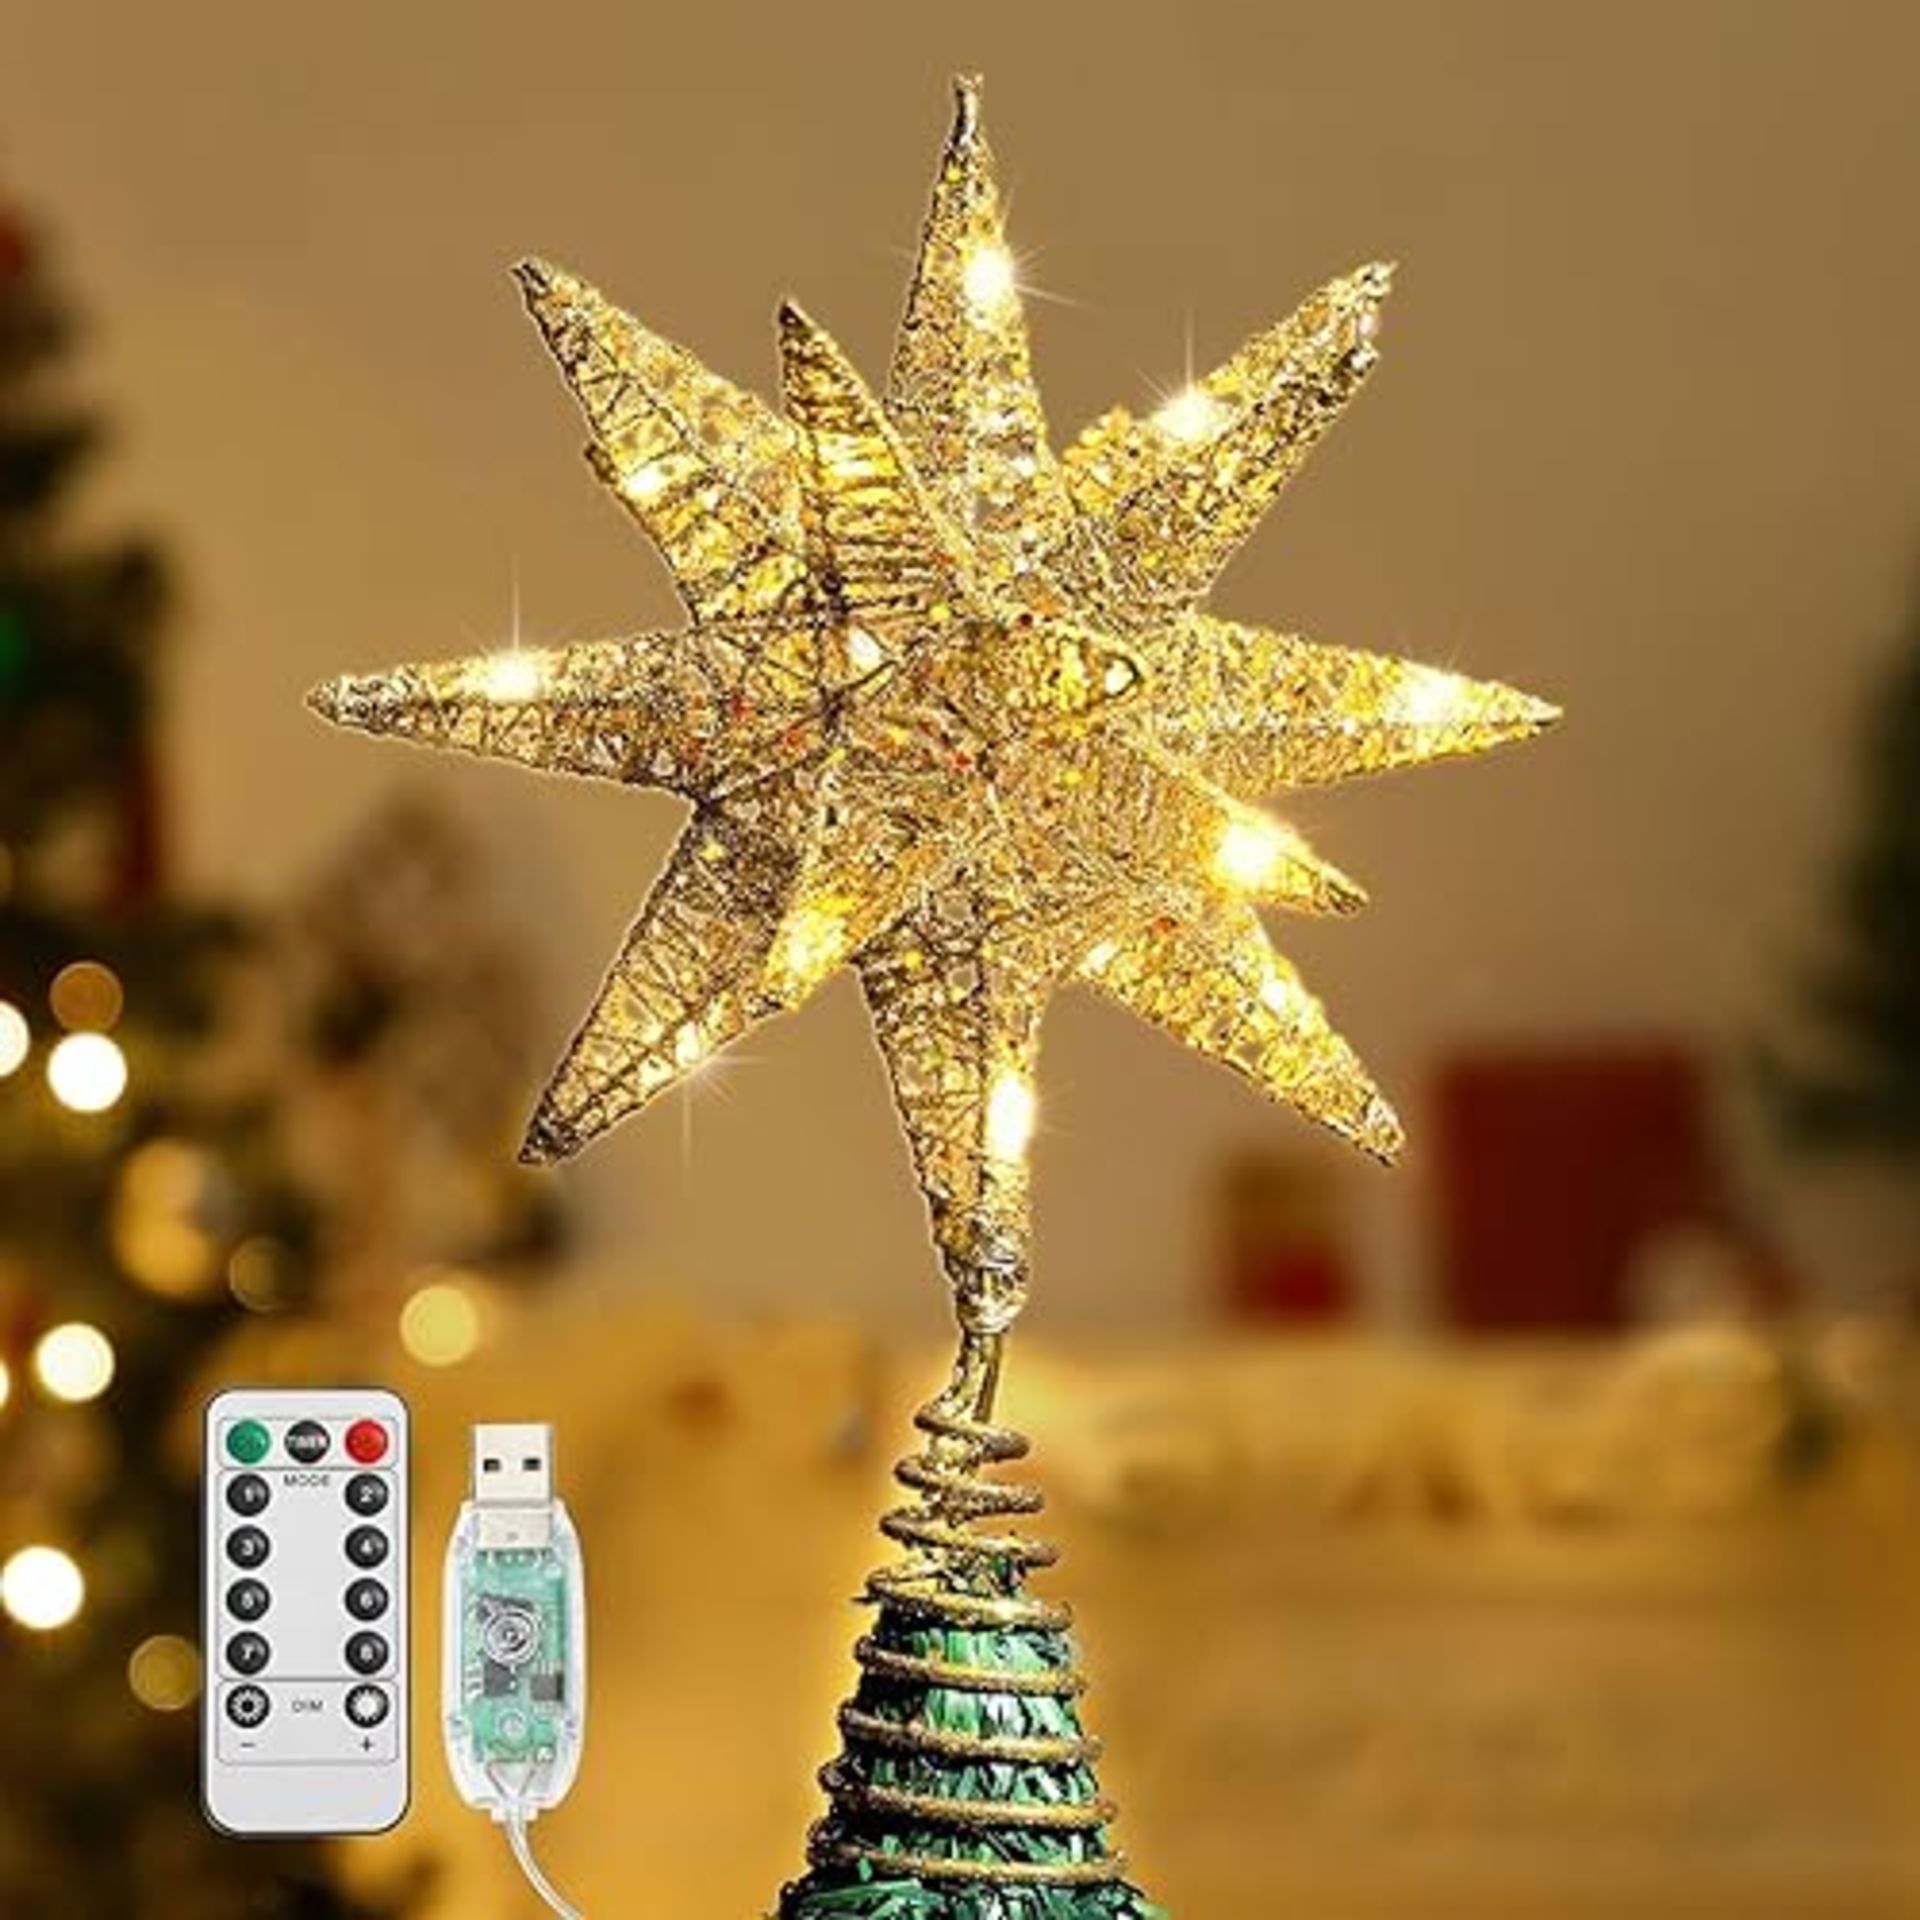 Lewondr Christmas Star Tree Topper, 3D Geometric Star USB Powered Remote Controlled Treetop Star...